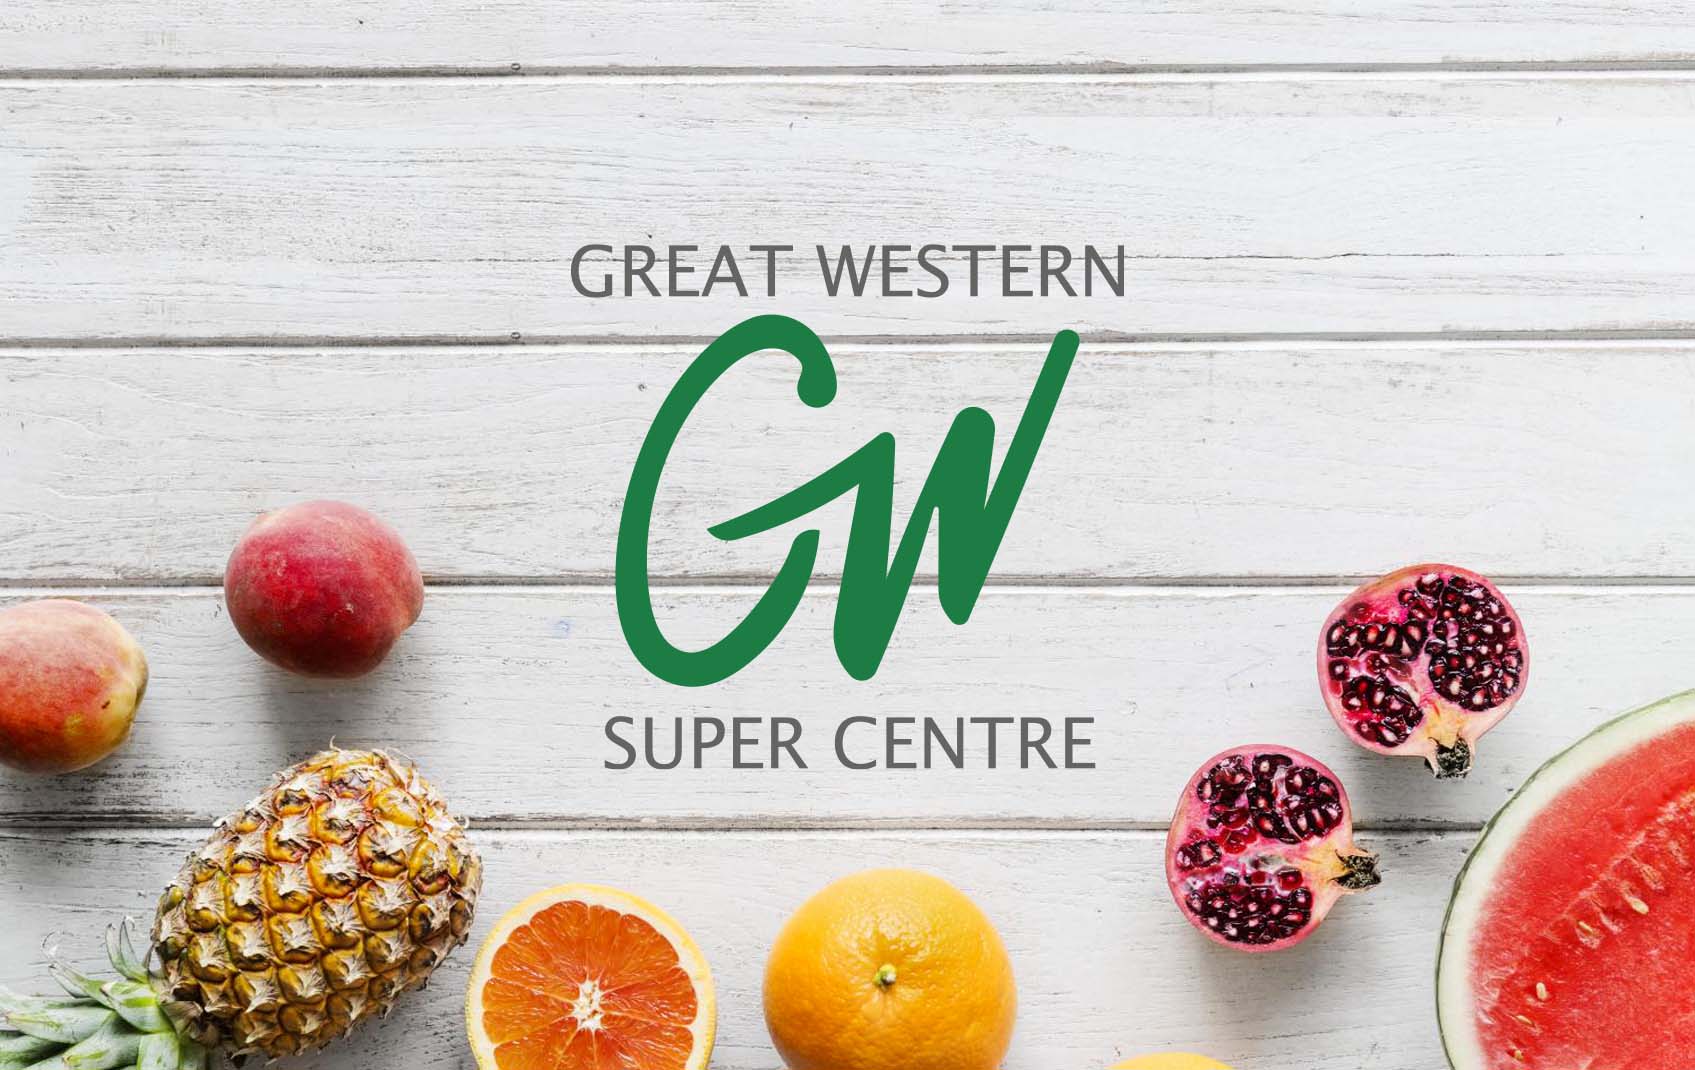 Great Western Super Centre